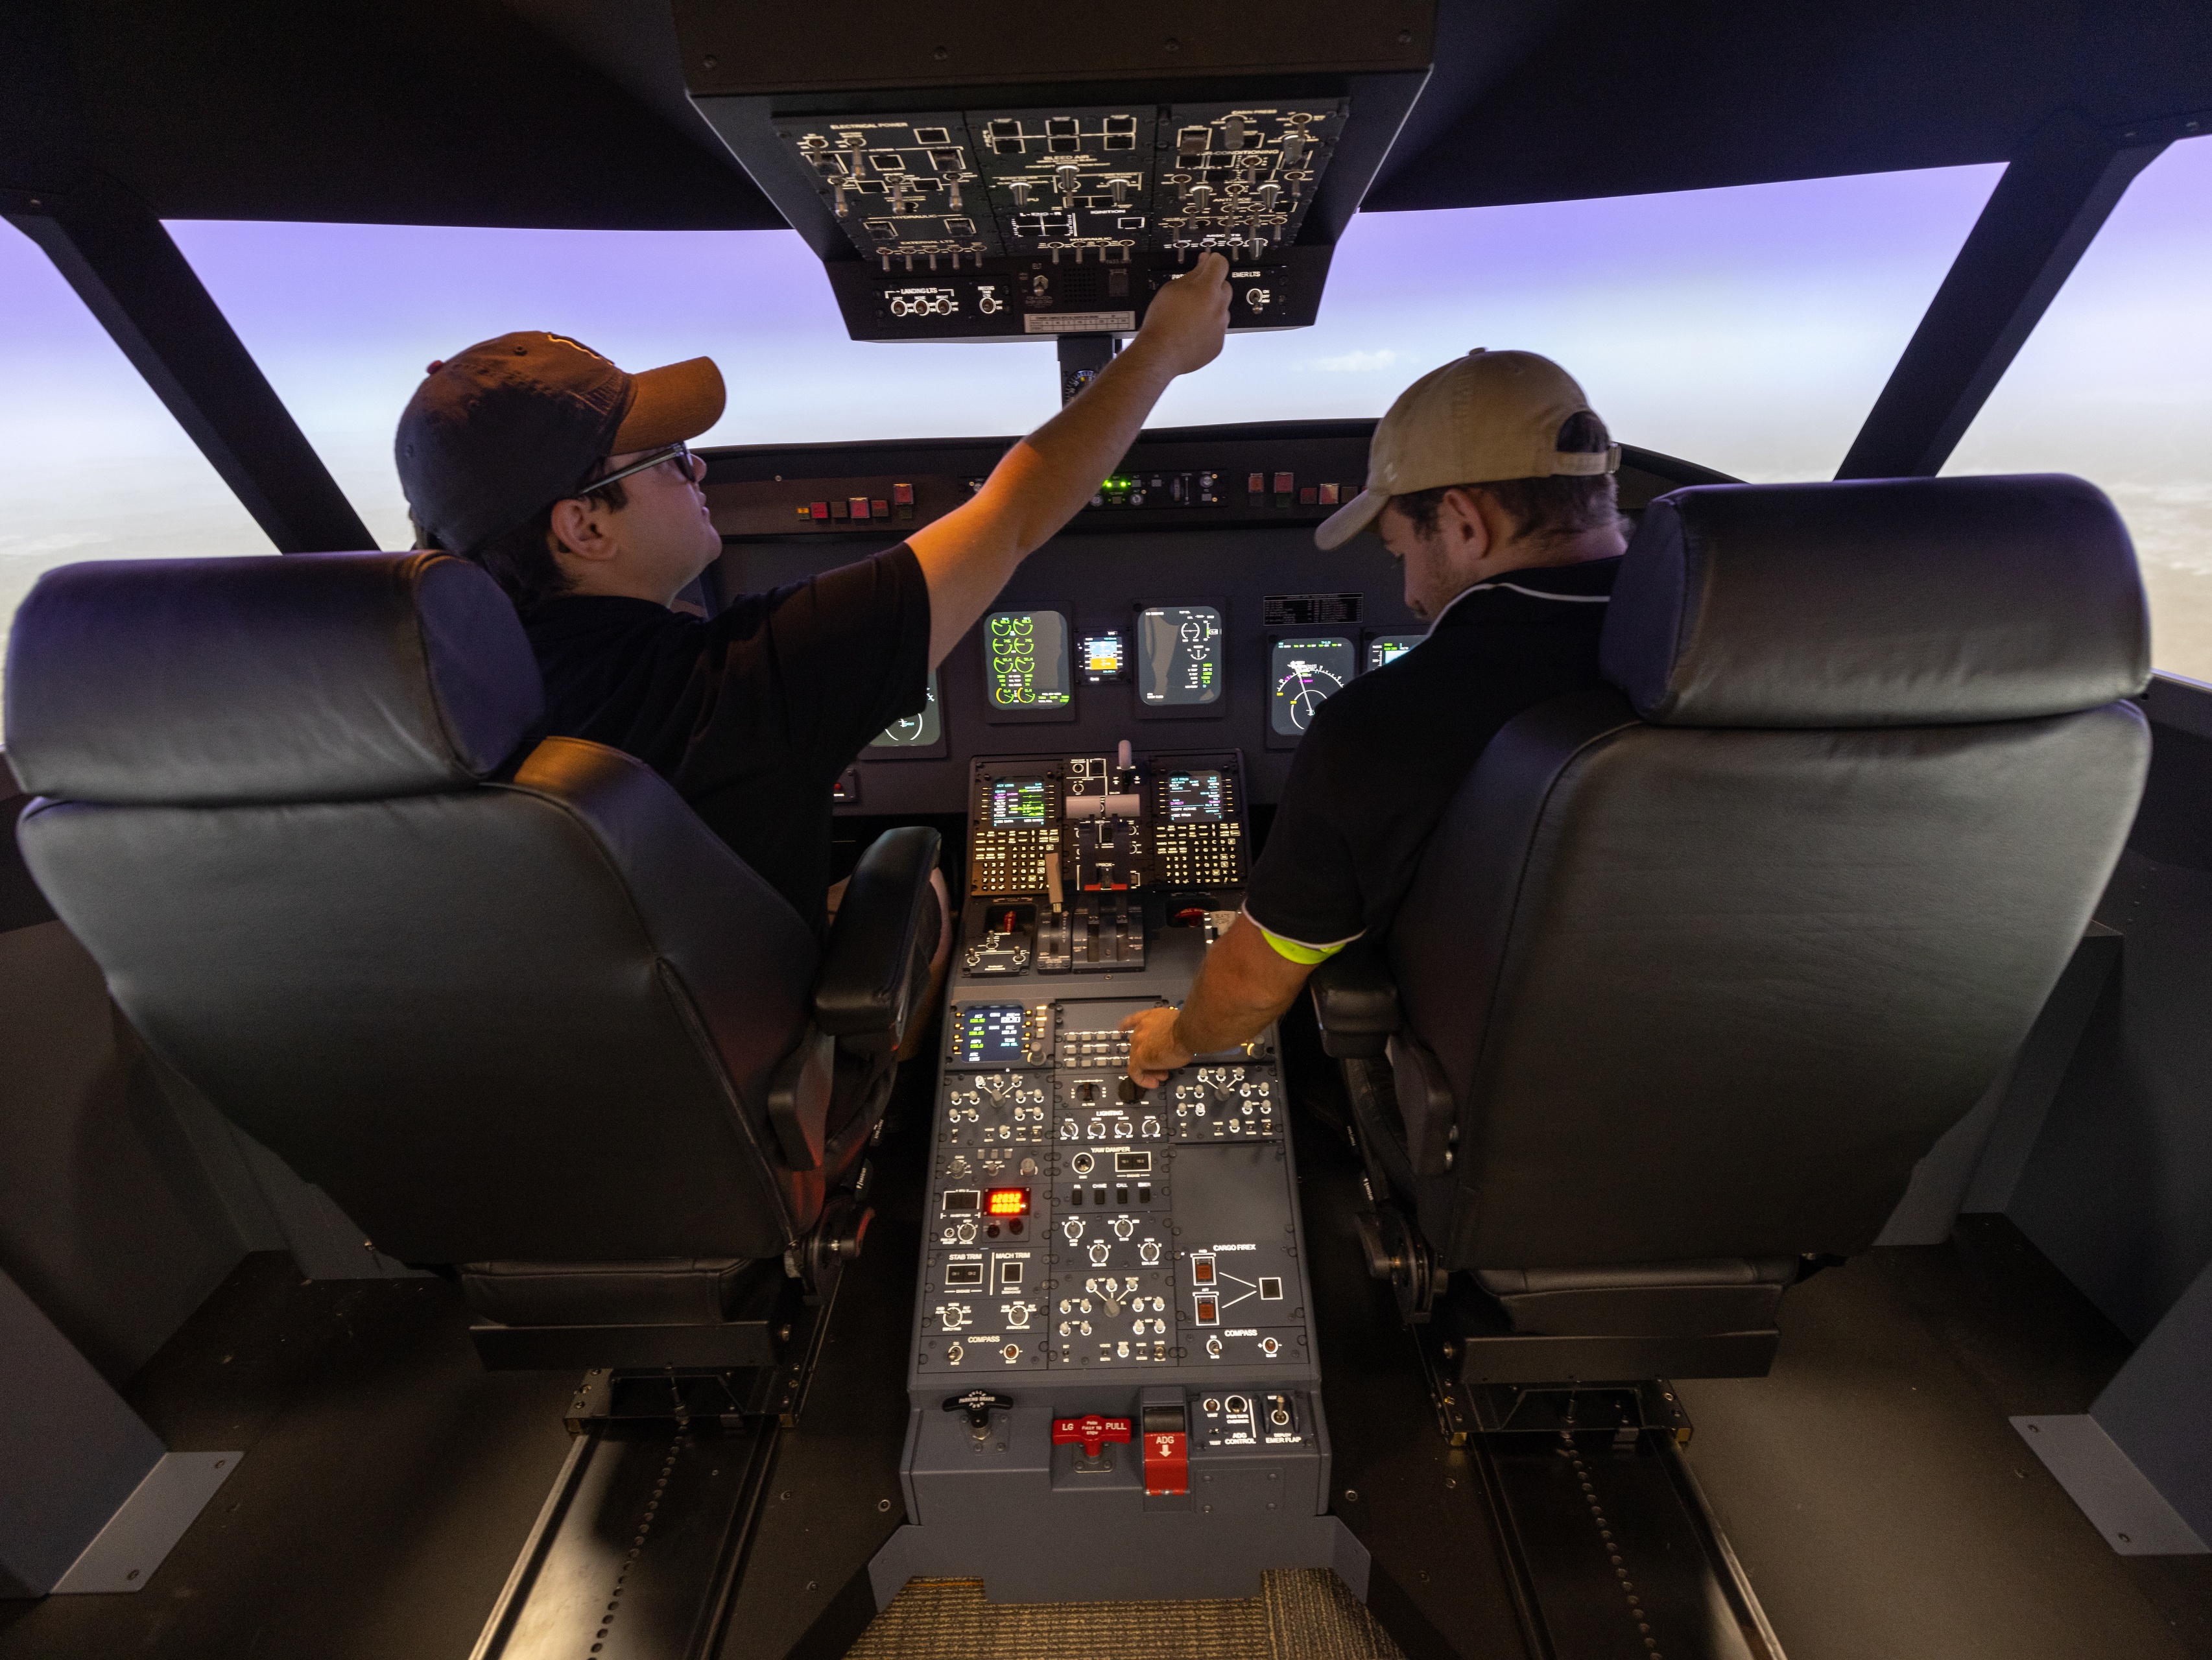 Two aviation students sit inside a flight simulator